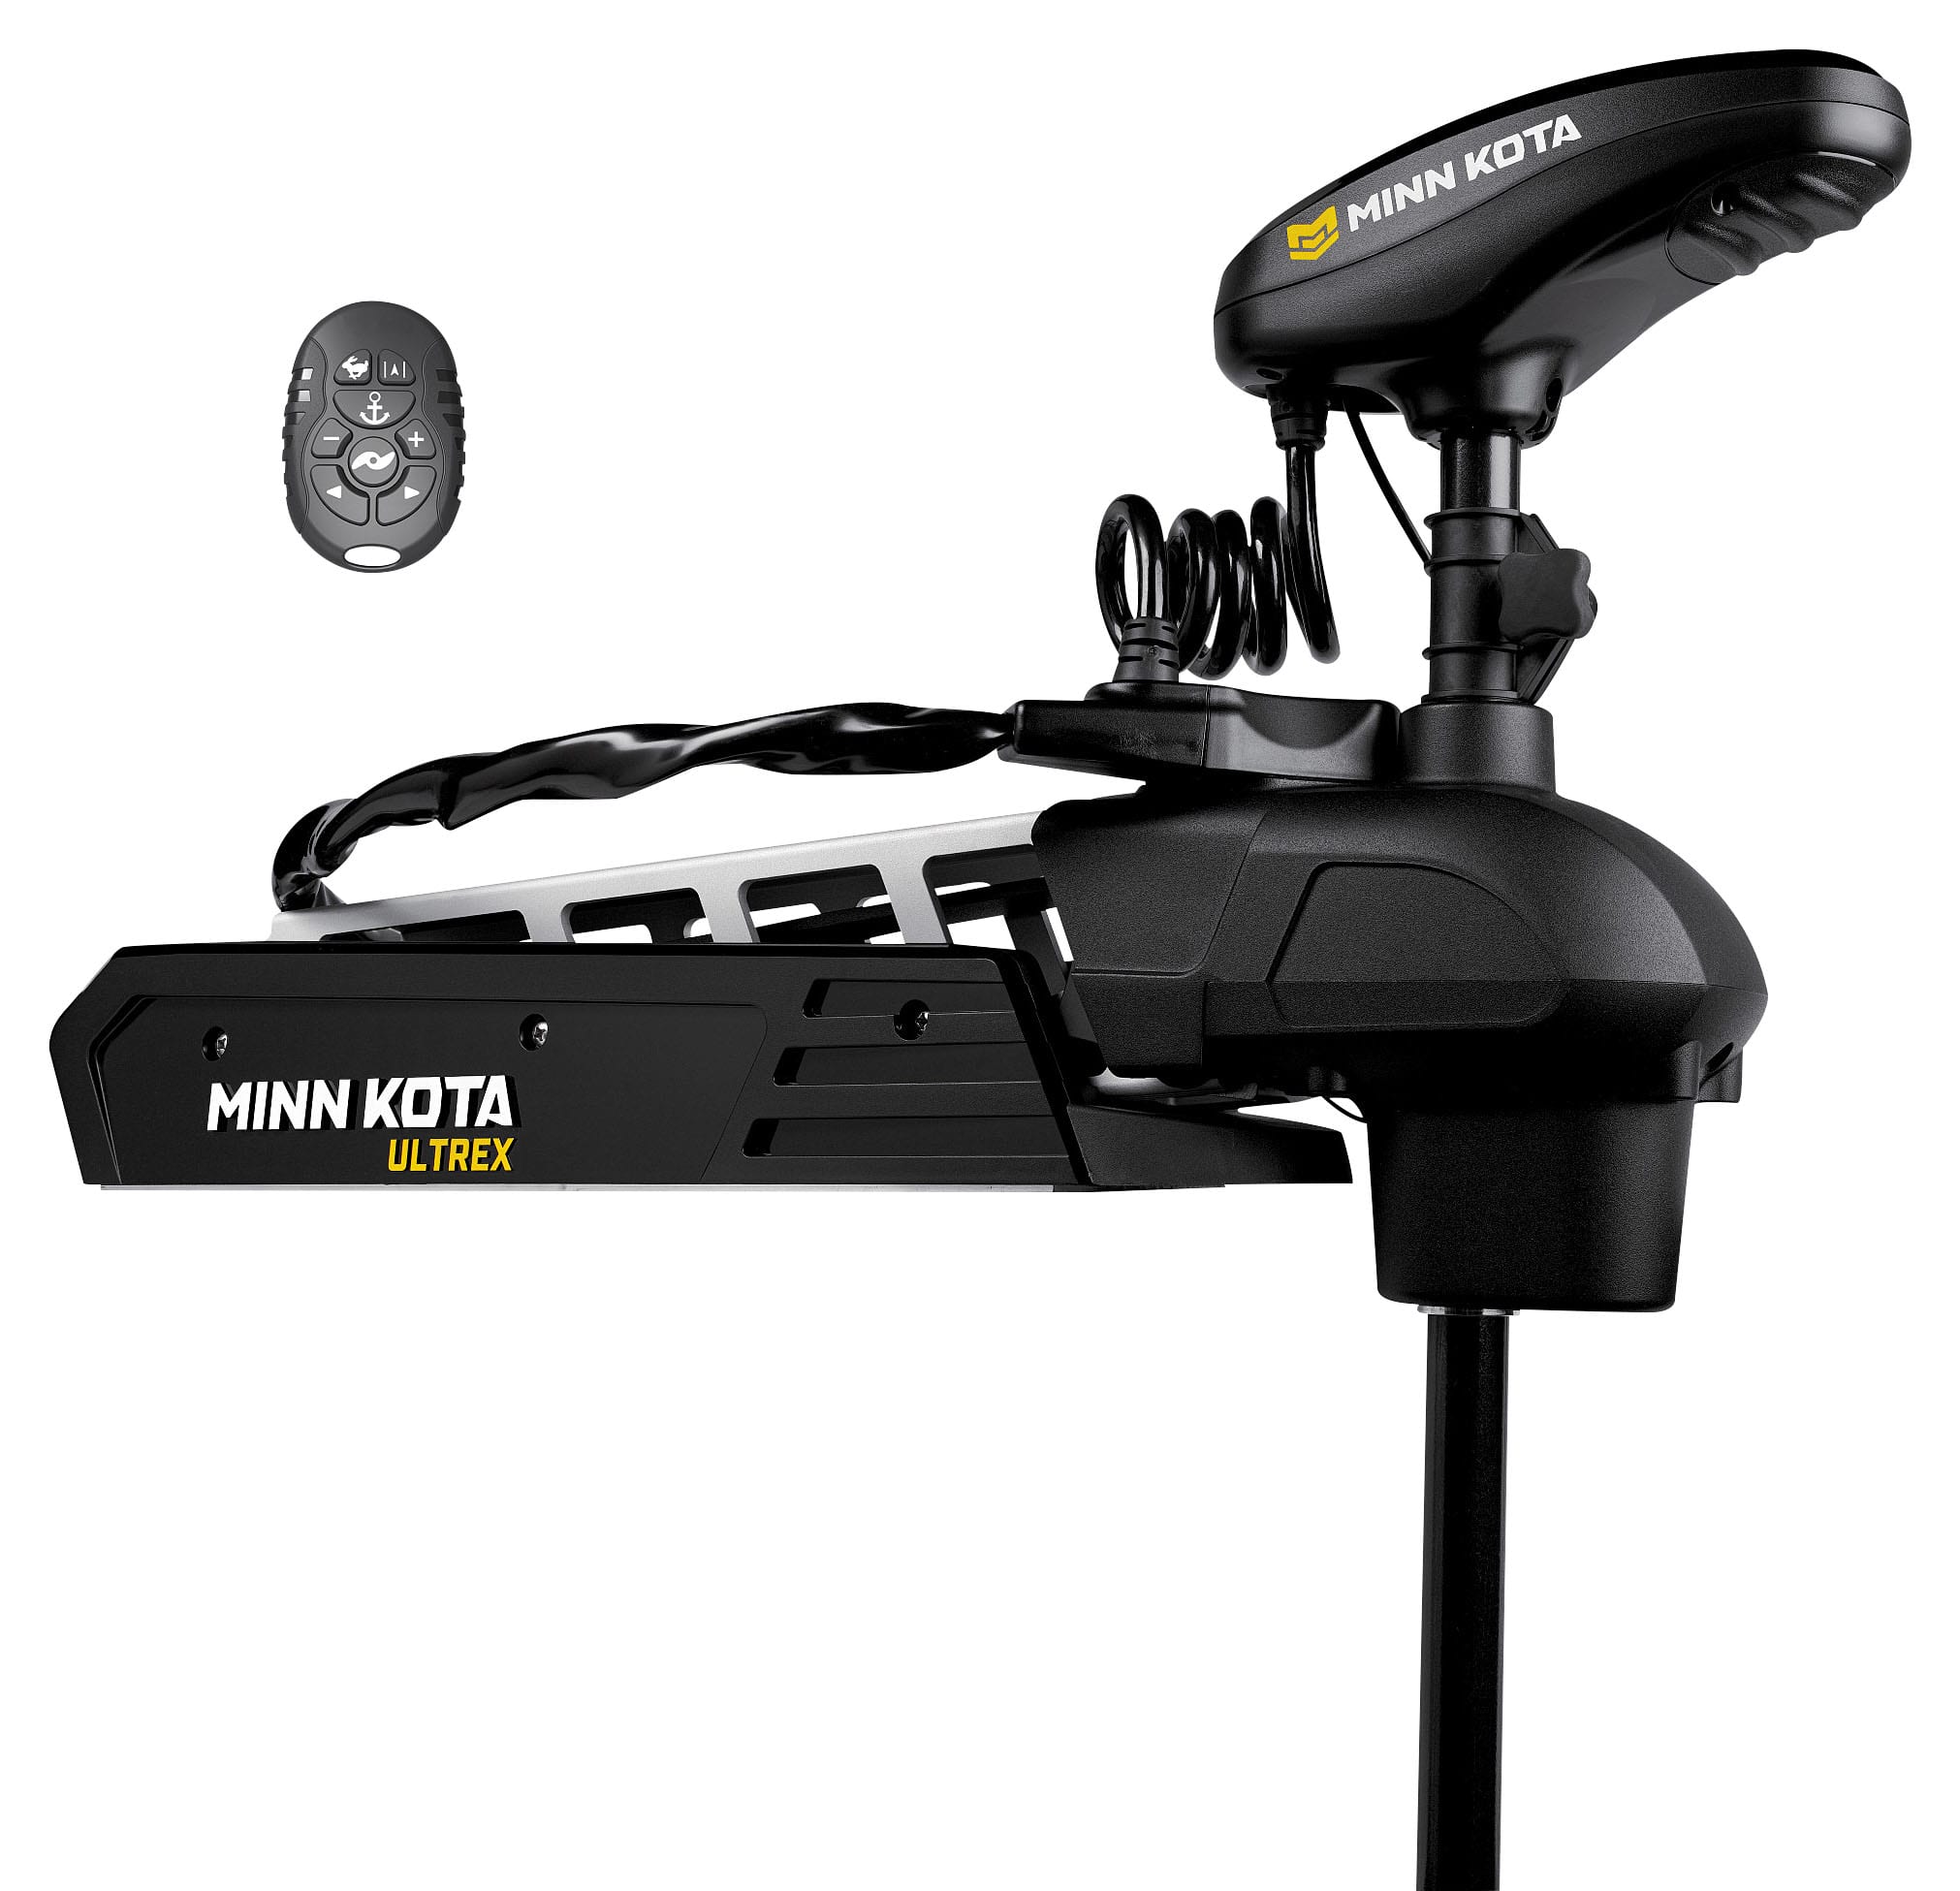 Minn Kota® Ultrex® 112lb 52" Freshwater Trolling Motor with Dual Spectrum CHIRP Sonar and Micro Remote